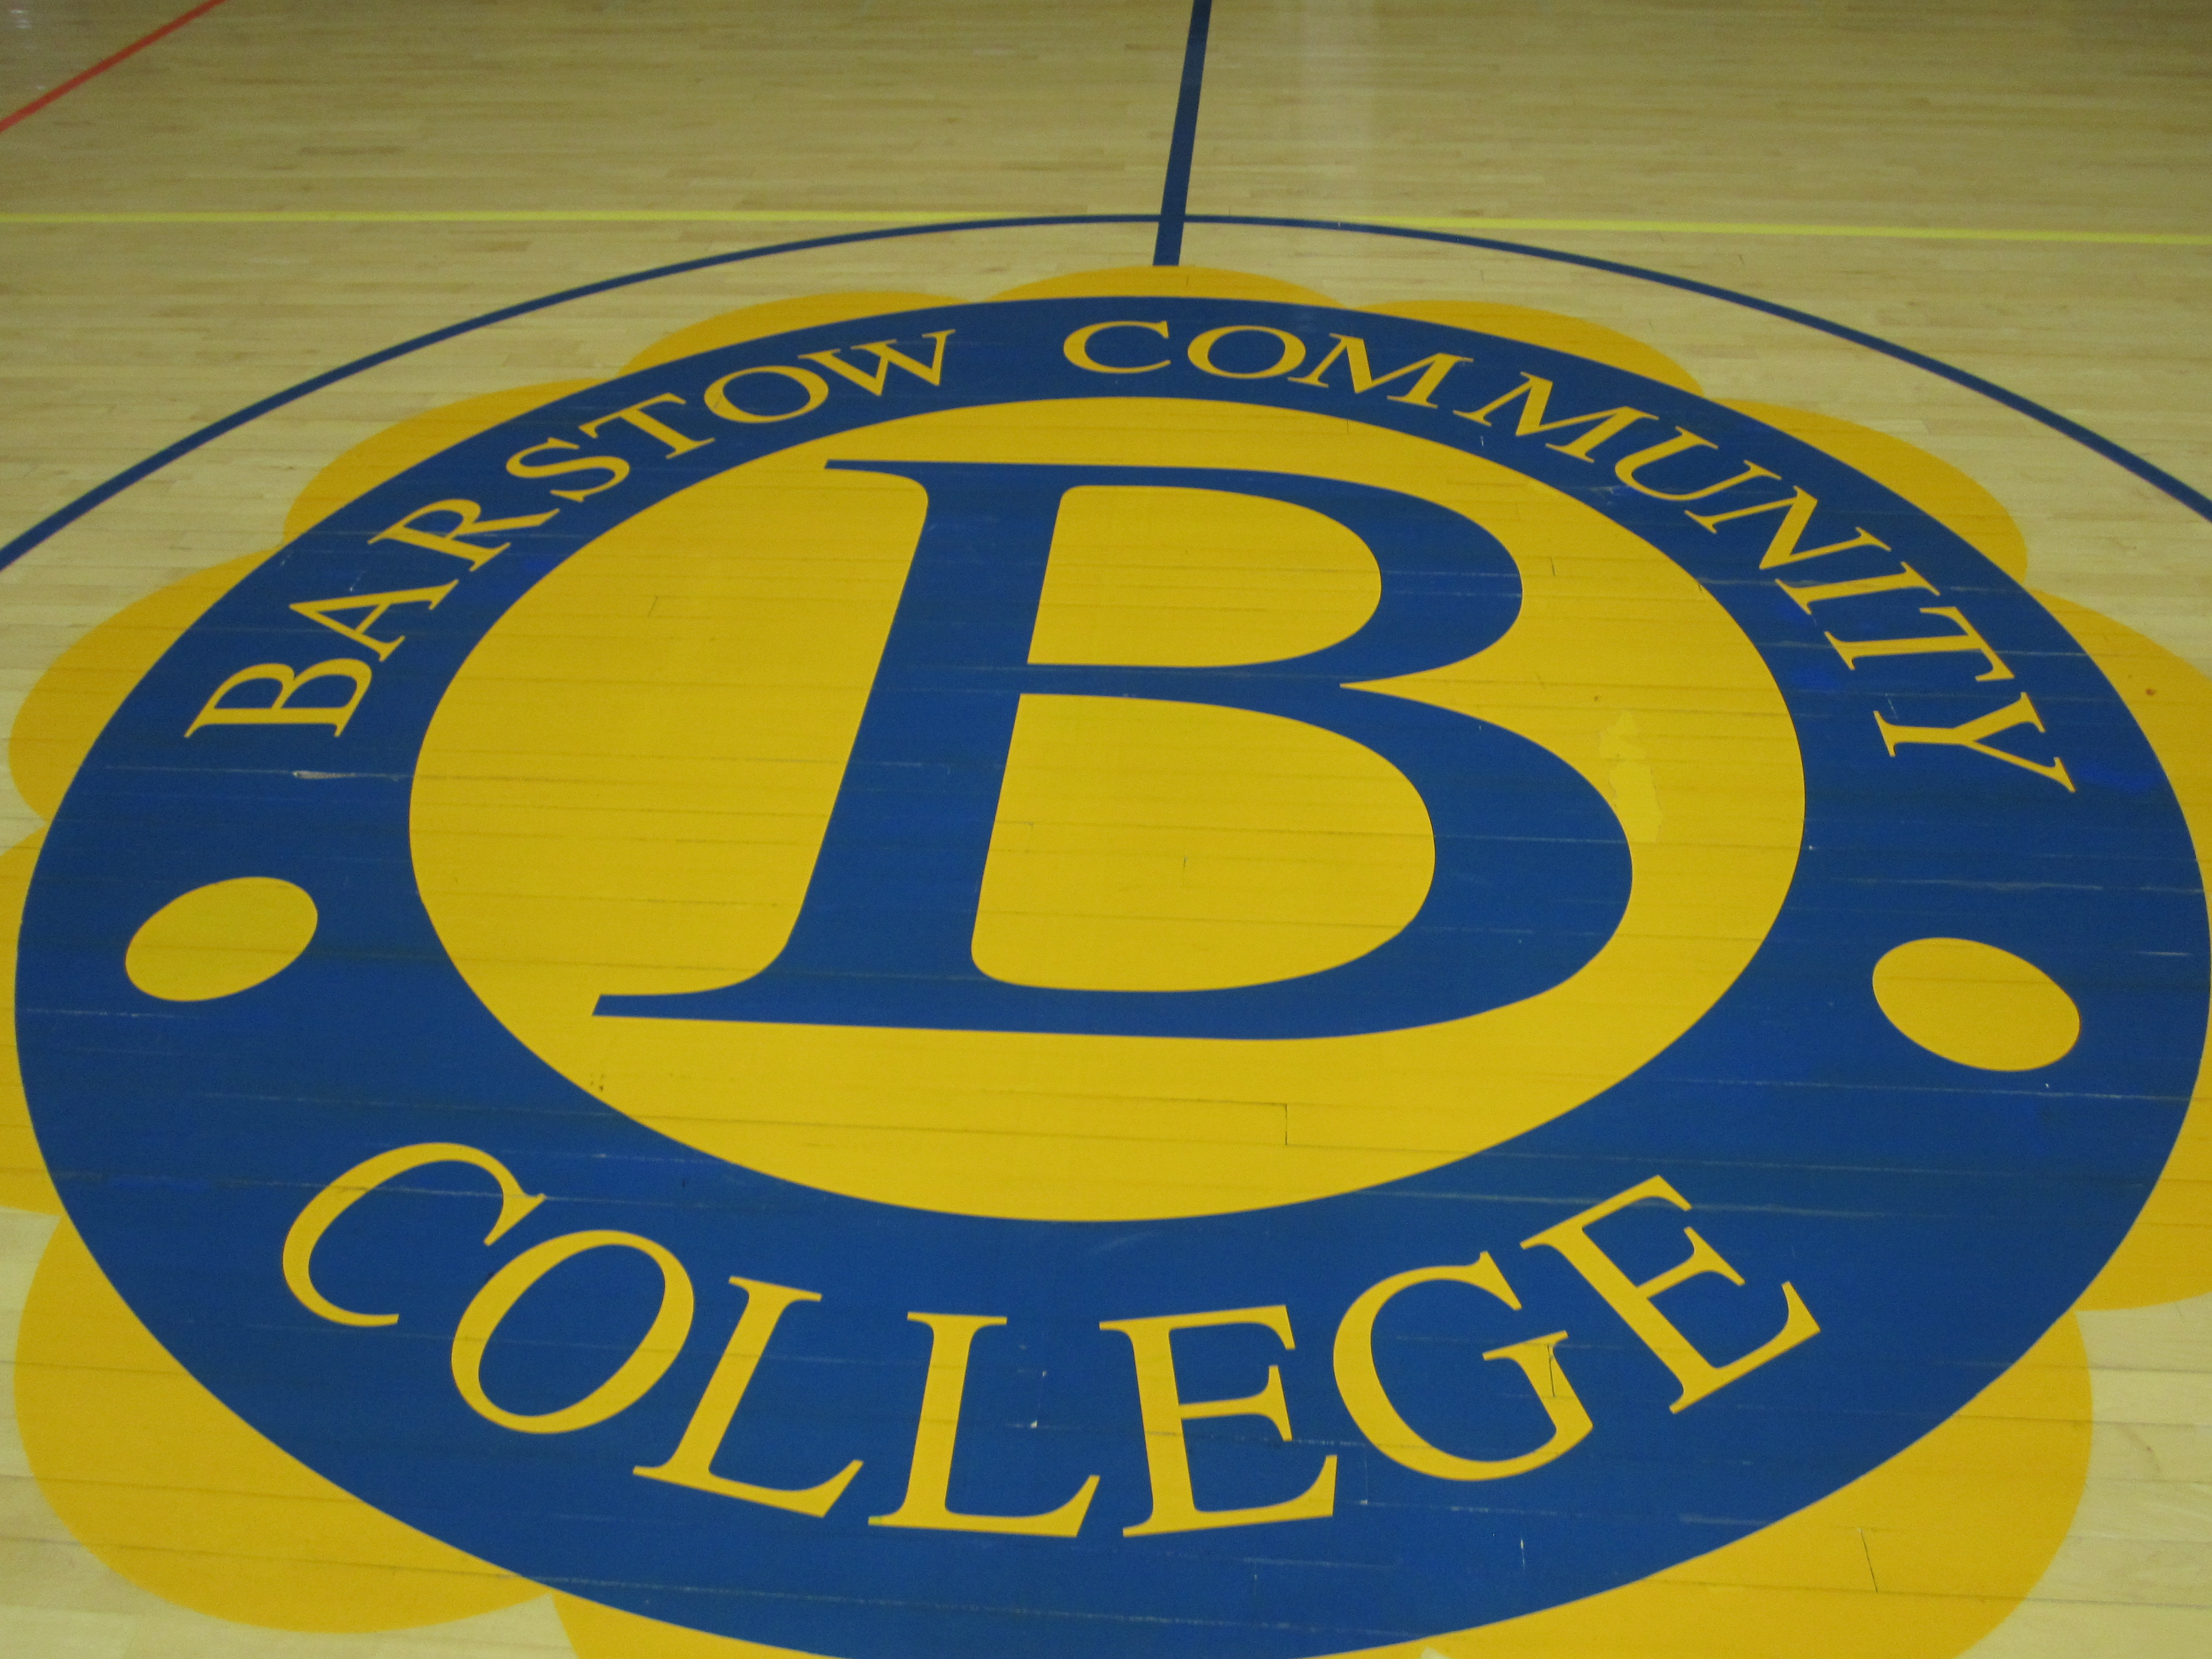 Barstow Community College 82